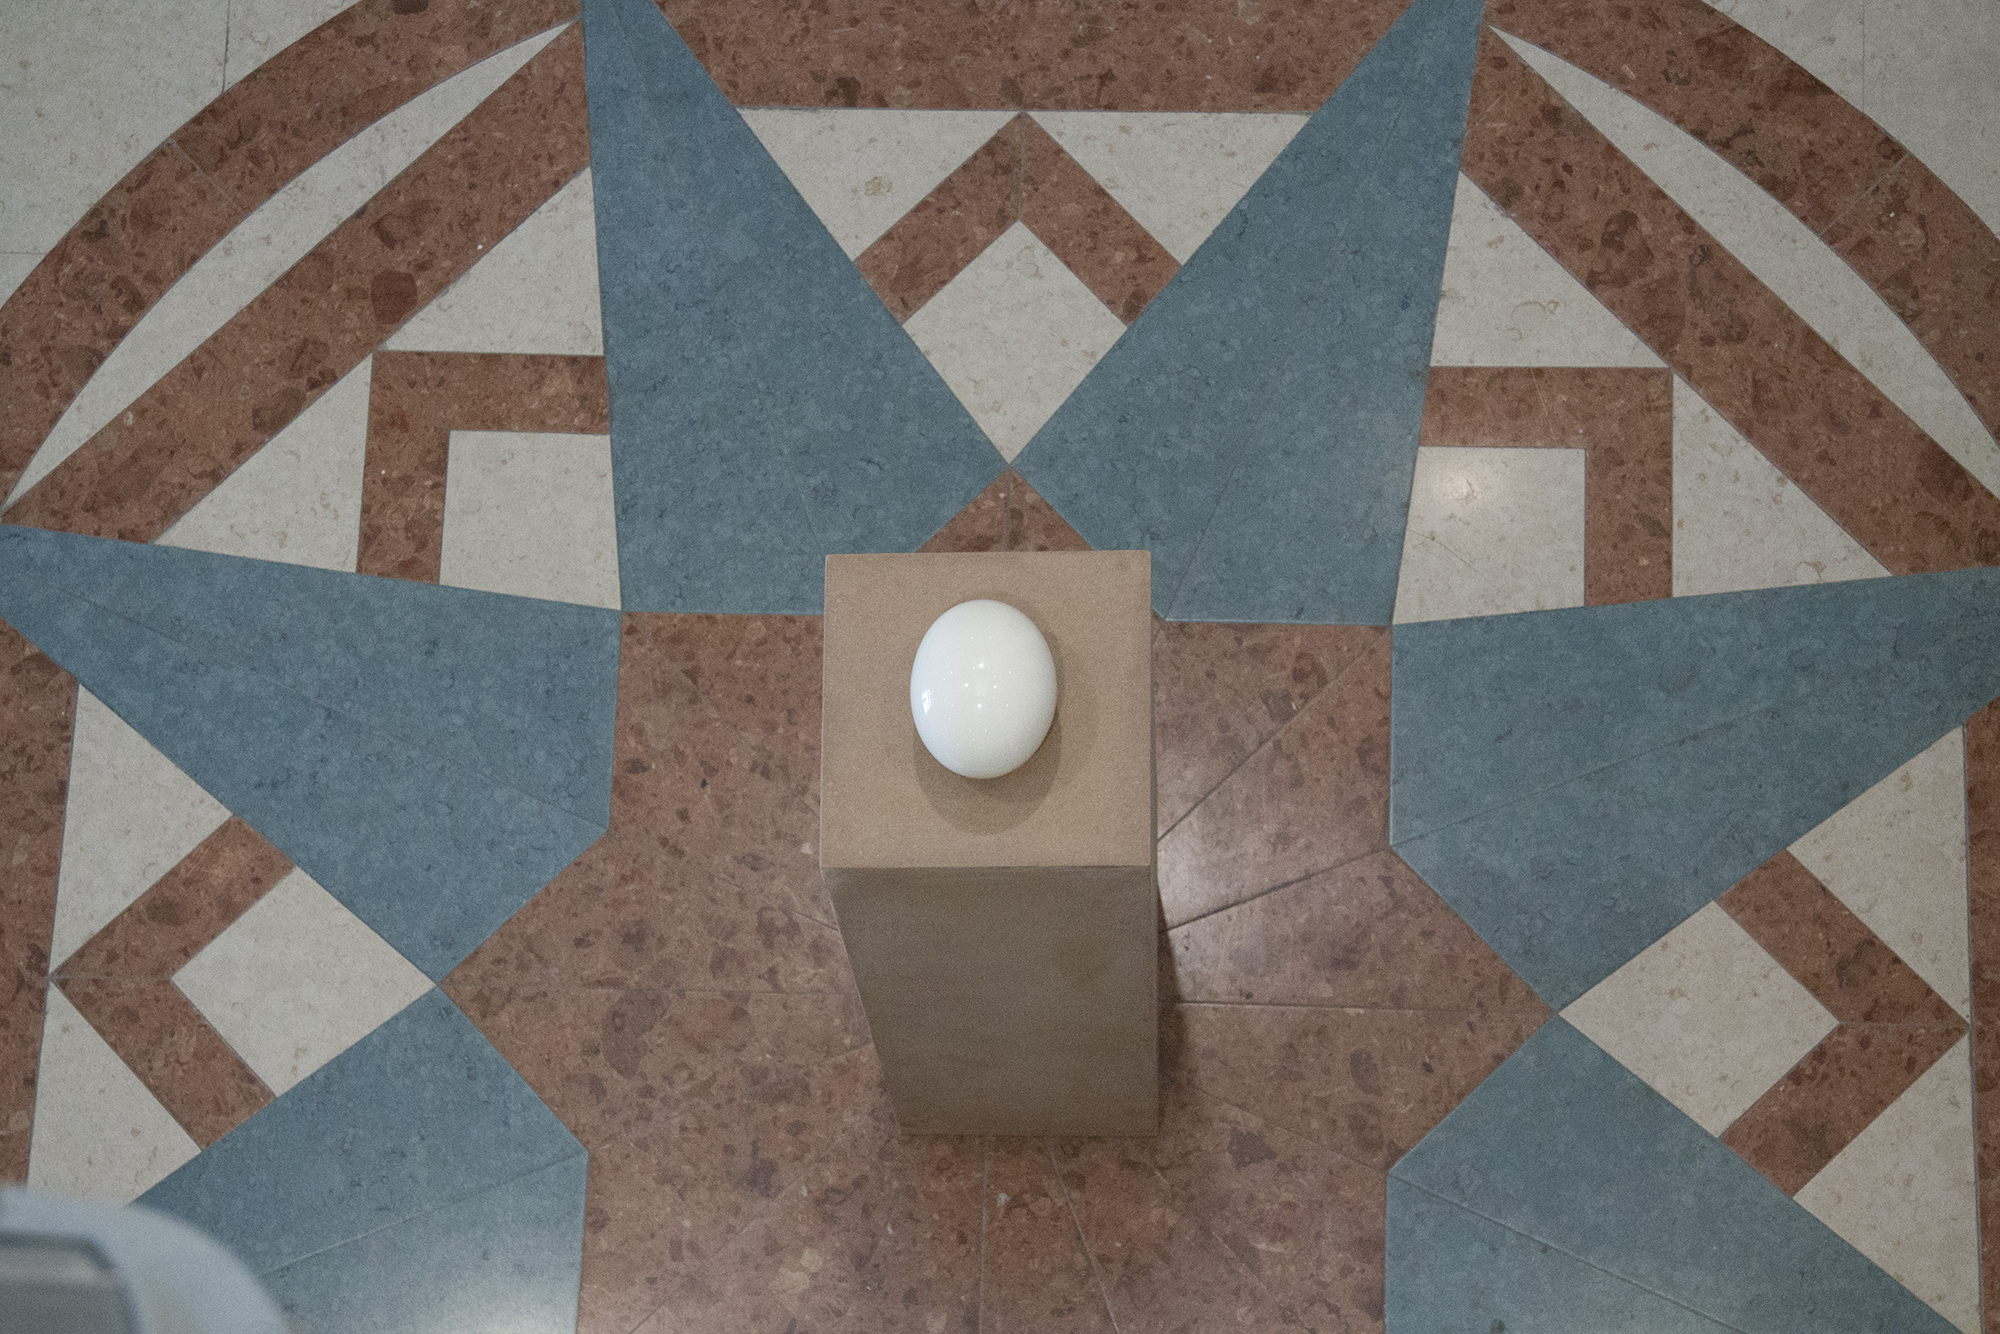 Ostrich Egg Image